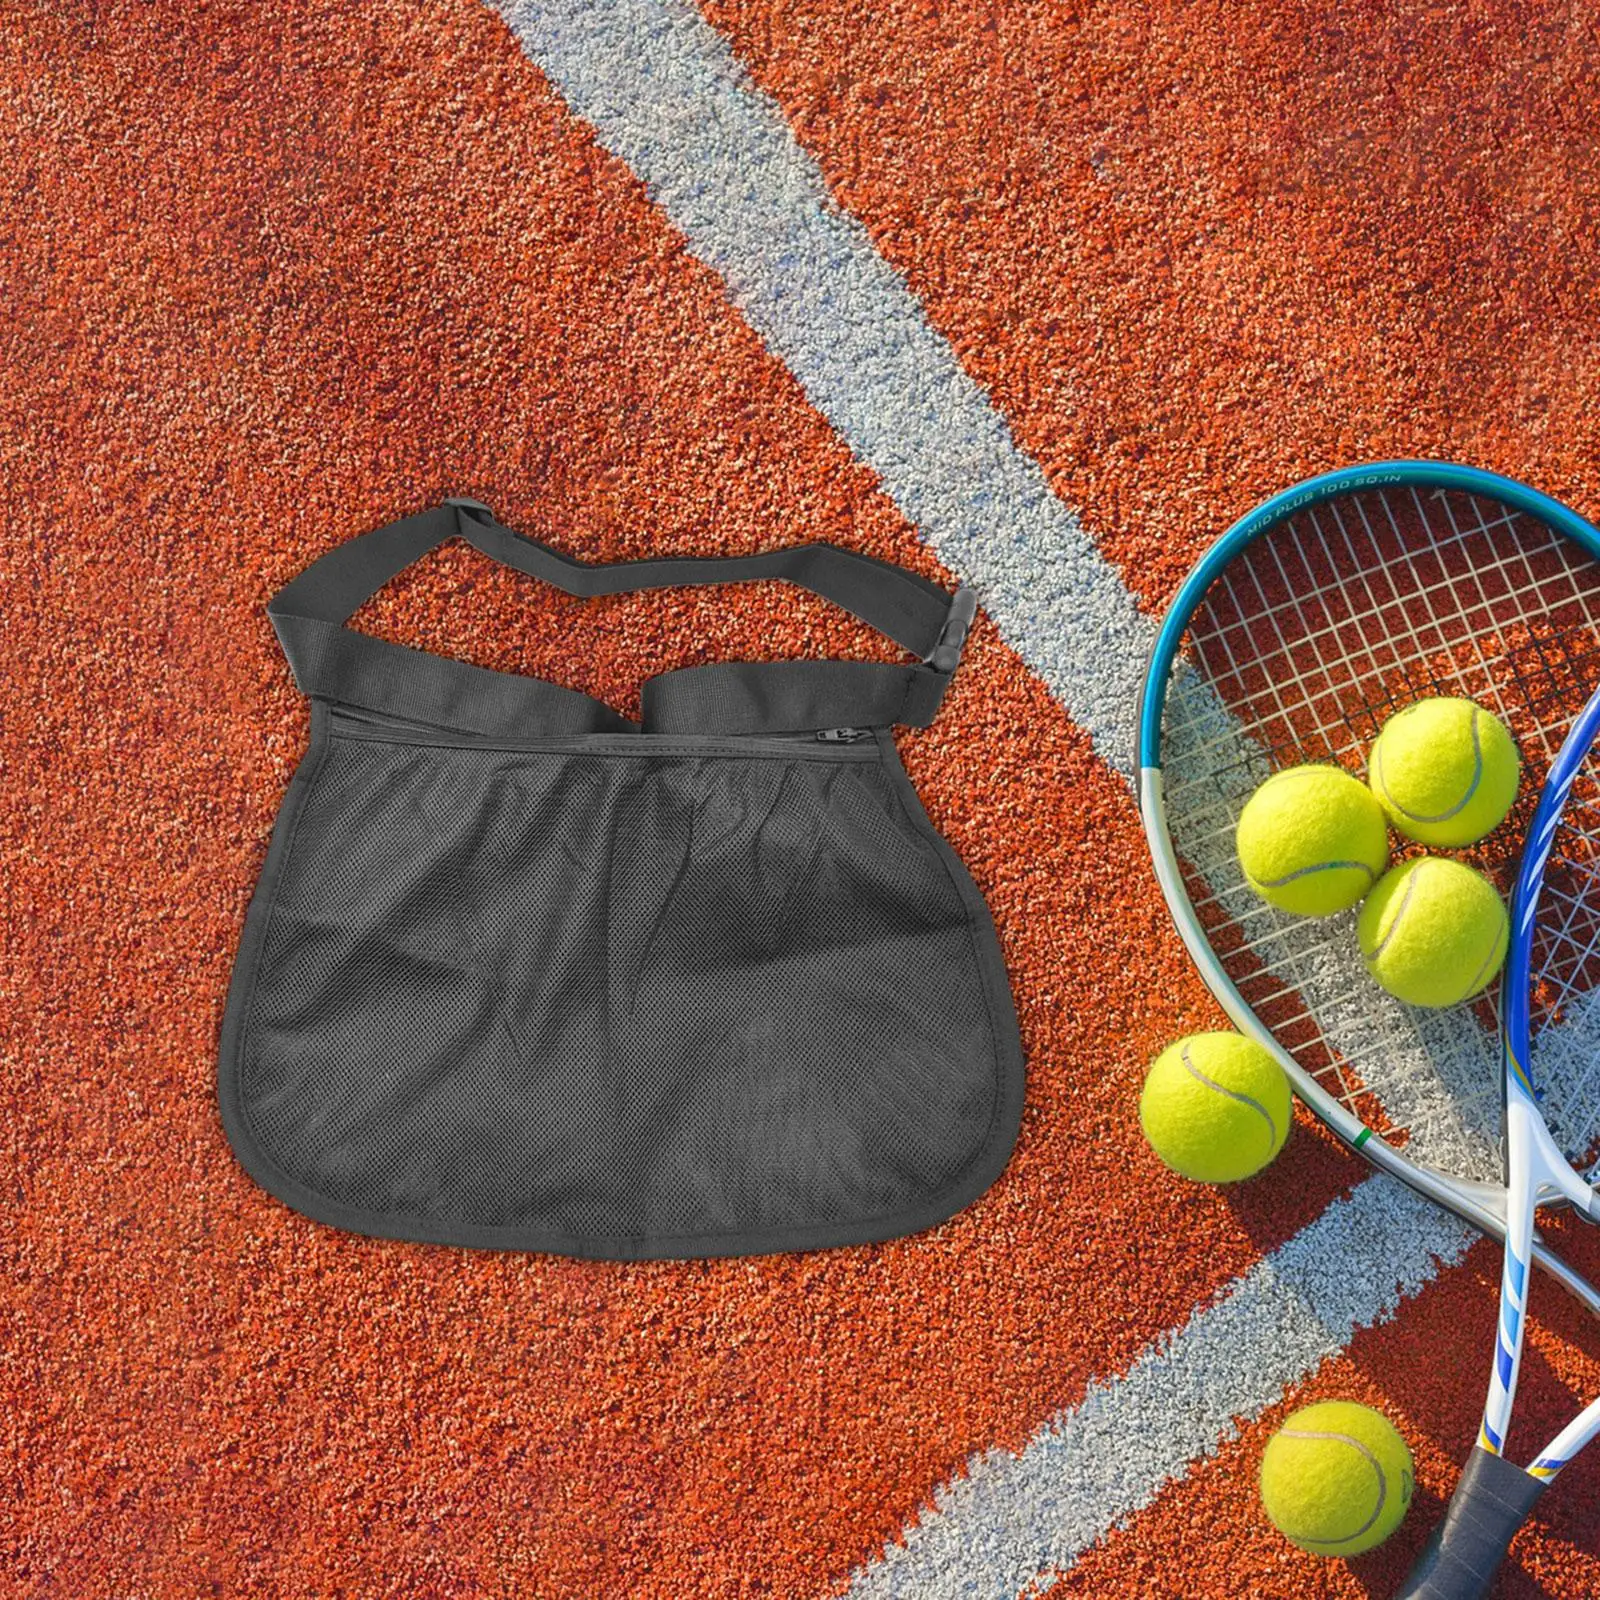 Black Tennis Ball Holder Holding 8 Tennis Balls Tennis Ball Storage Bag for Women Men Storing Balls and Phones Exercise Workout